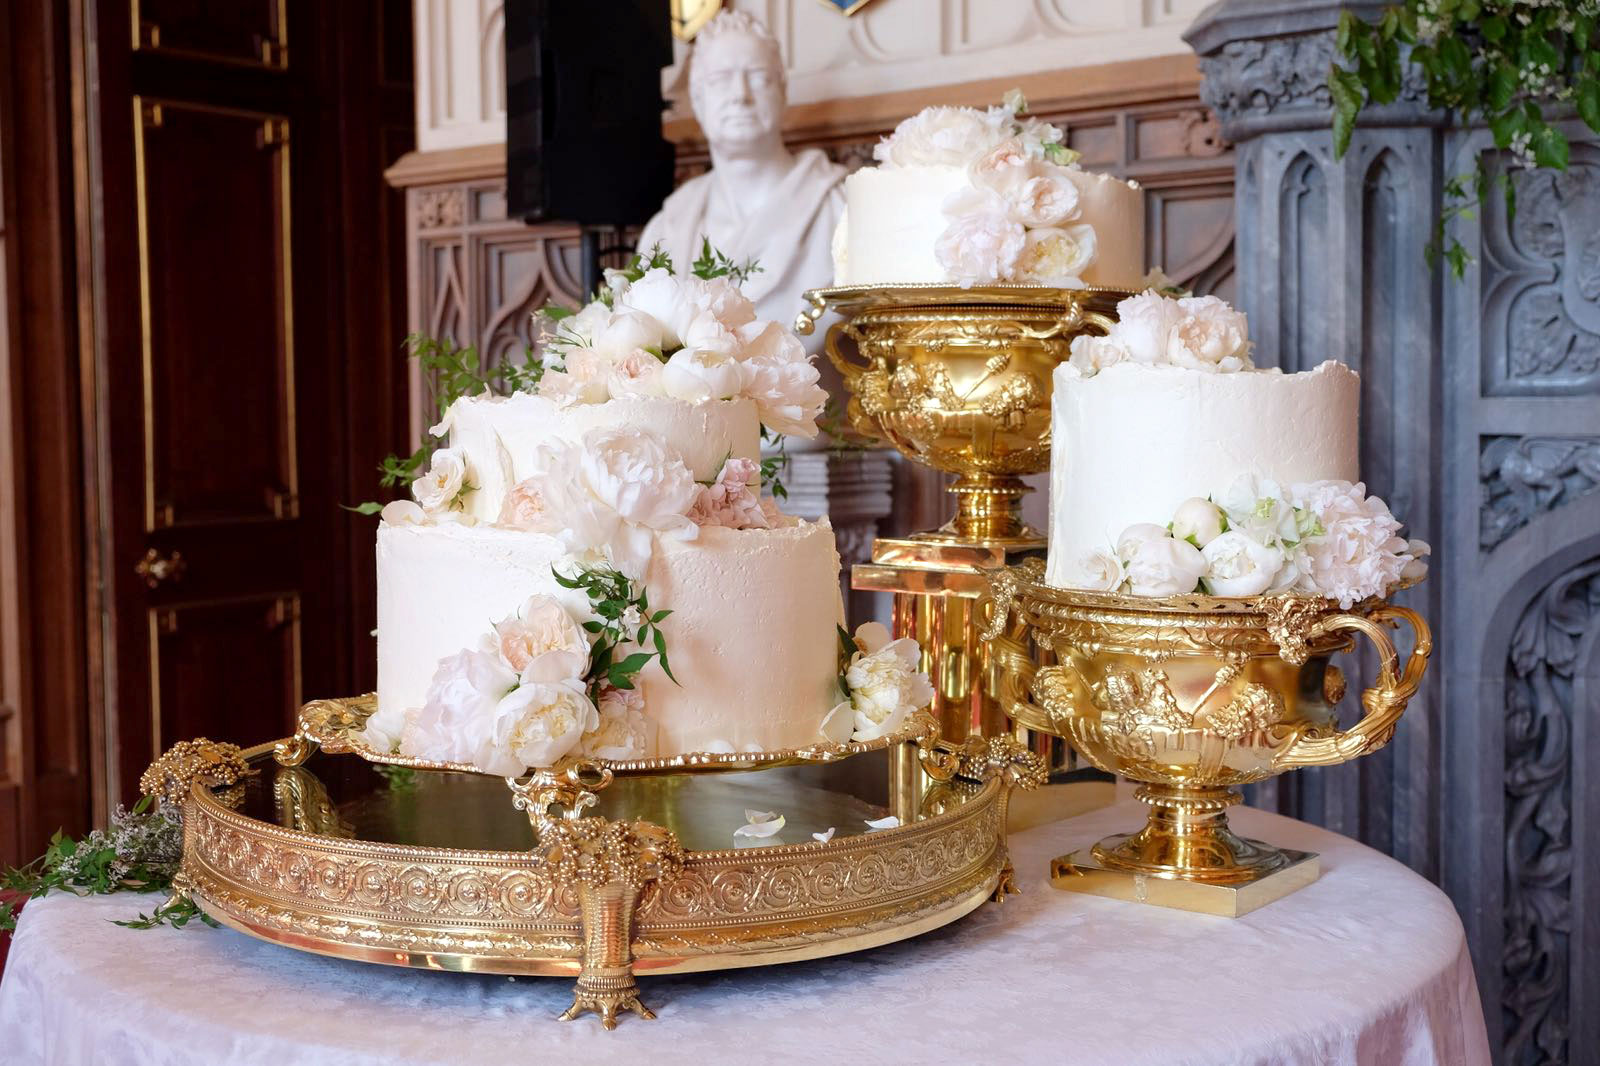 PHOTO: Royal wedding cake for Prince Harry and Meghan Markle.